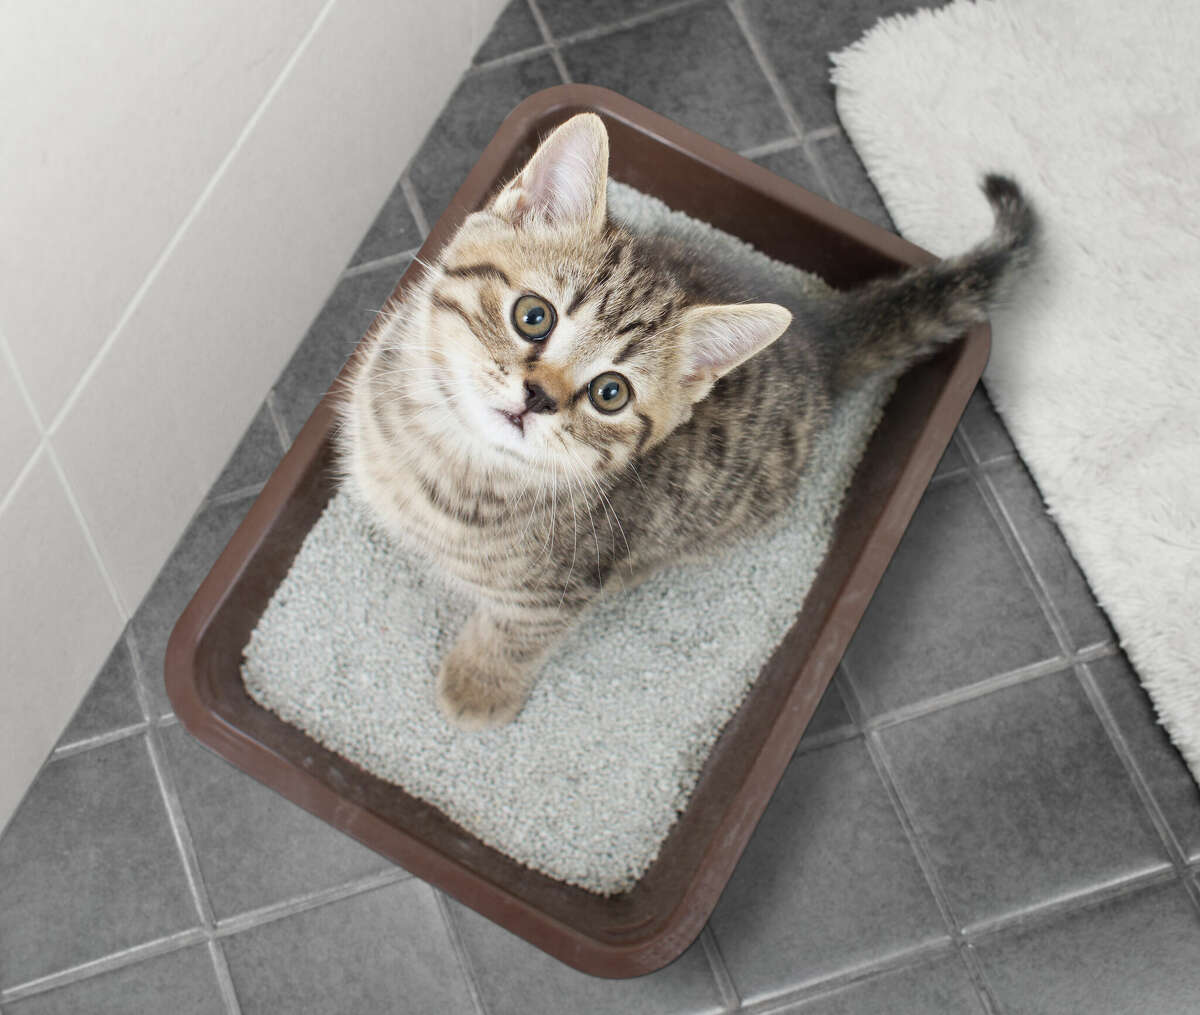 Cat top view sitting in litter box in bathroom